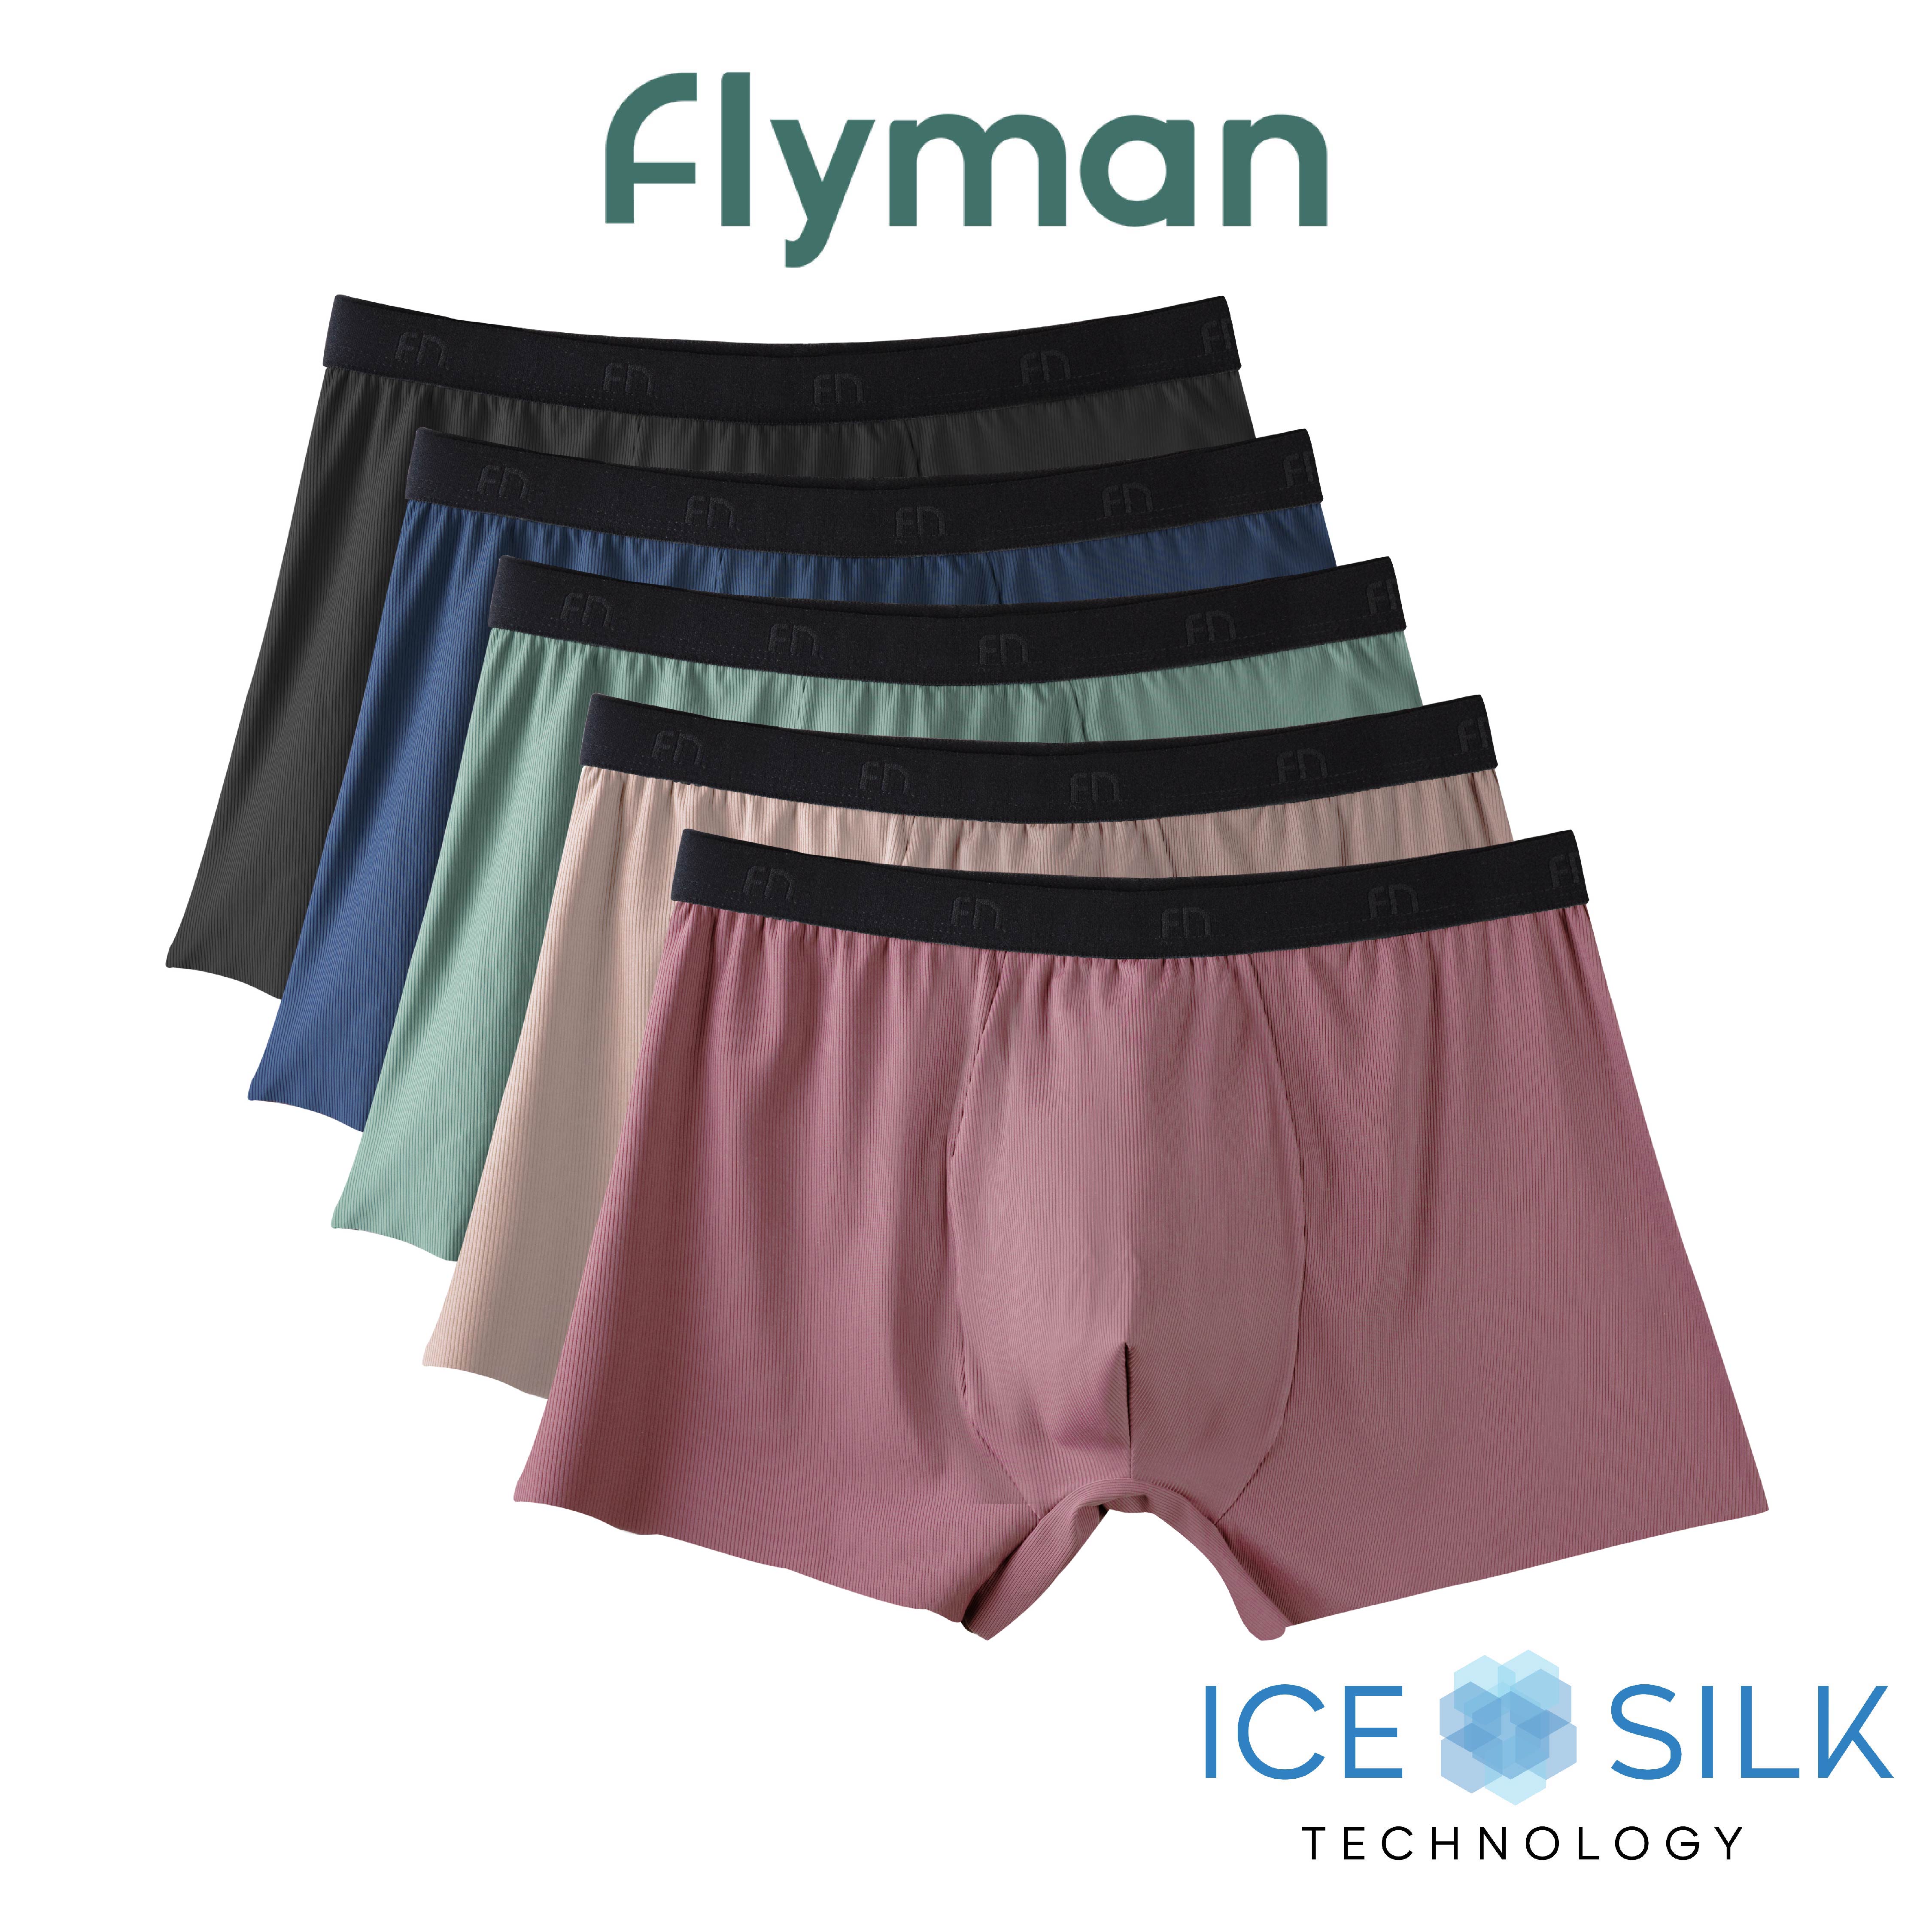 Flyman Celana Dalam Boxer Pria Ribb CD Bokser Cowok Ice Silk FM 3451 1 Pcs